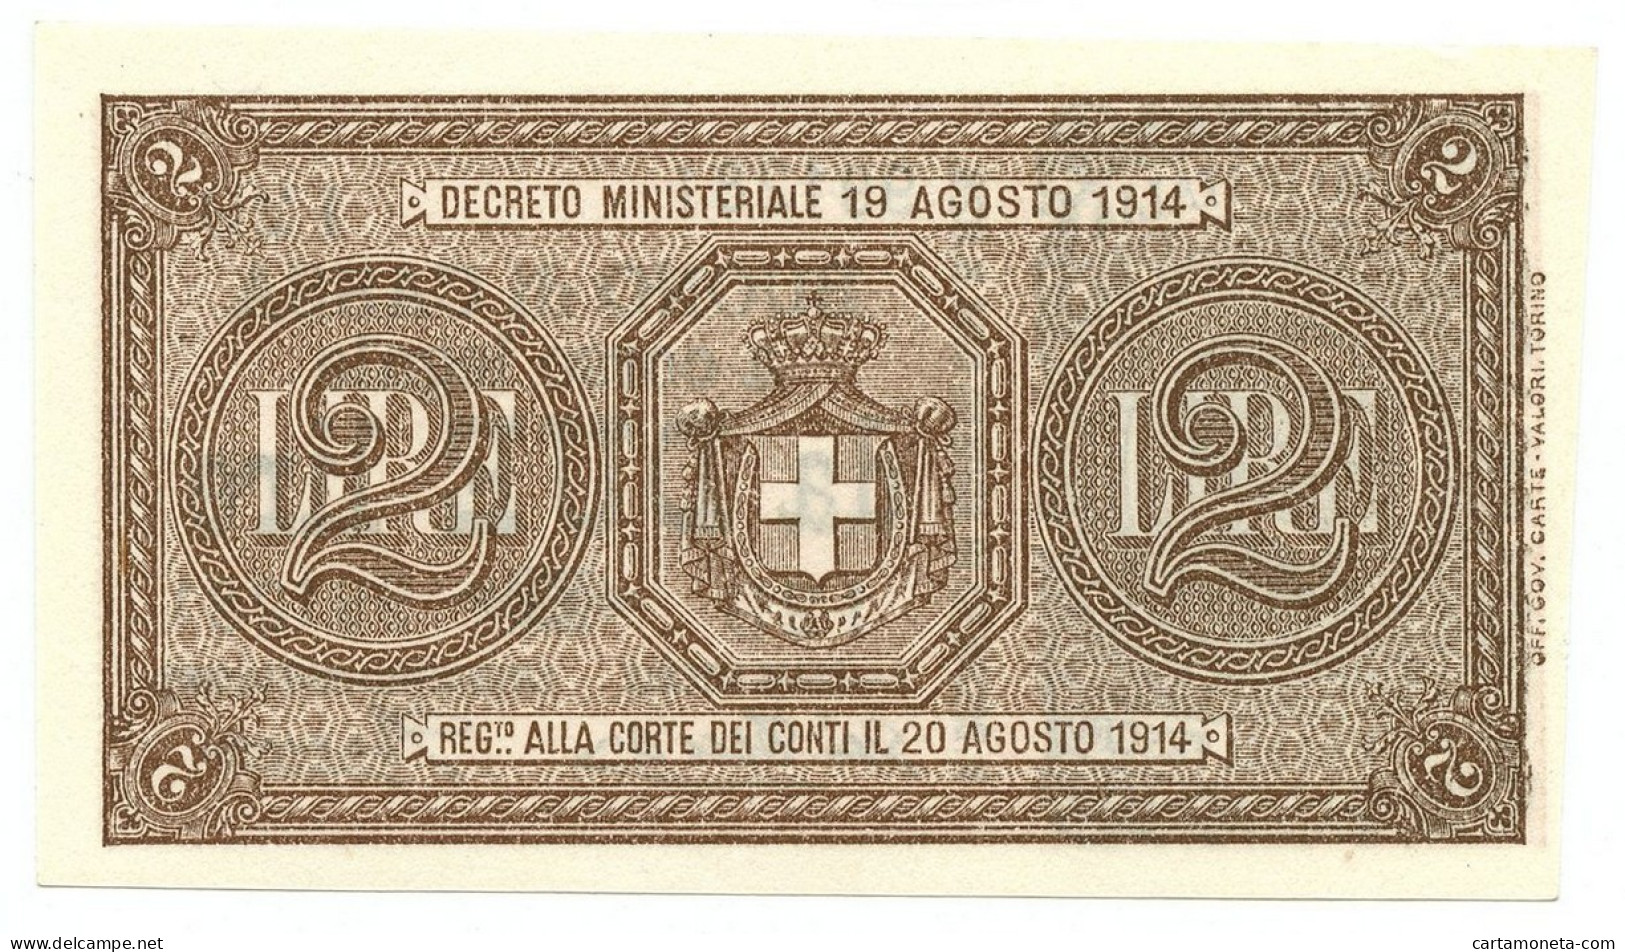 2 LIRE BUONO DI CASSA EFFIGE VITTORIO EMANUELE III 14/03/1920 FDS-/FDS - Regno D'Italia – Autres